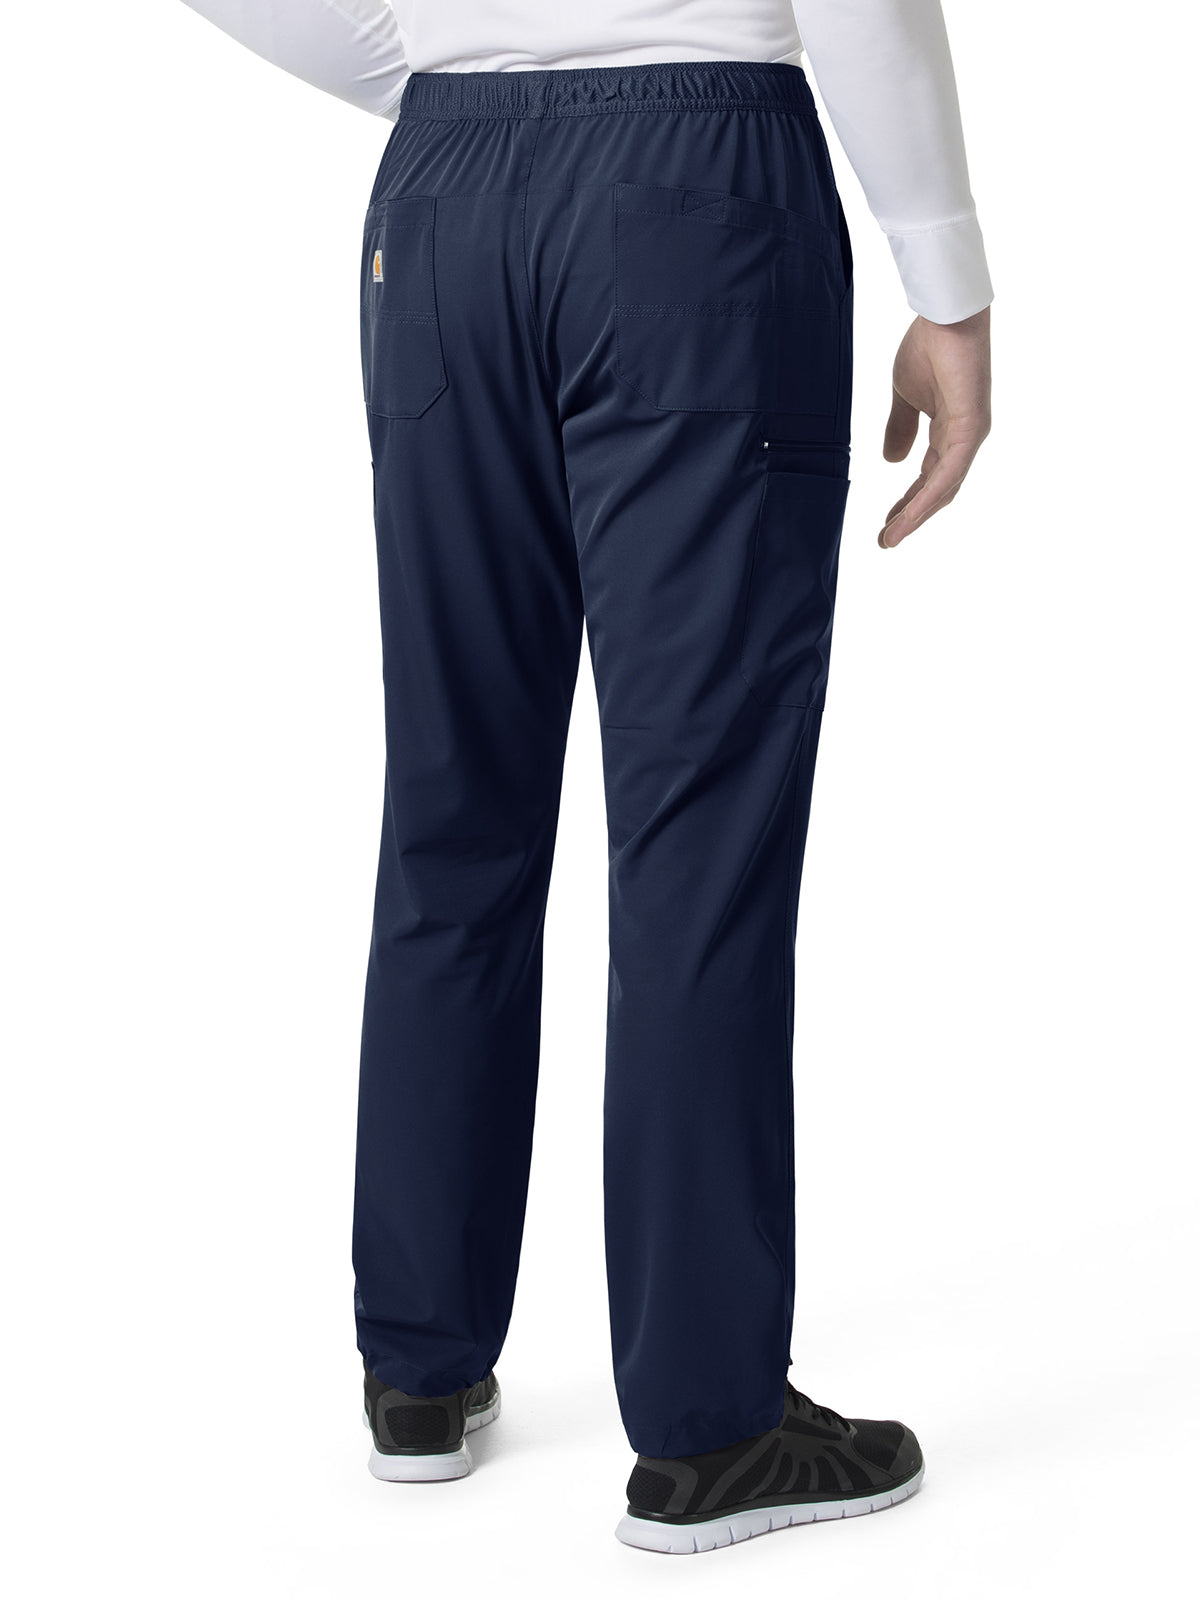 Men's Twill Straight Leg Pant - C55106 - Navy